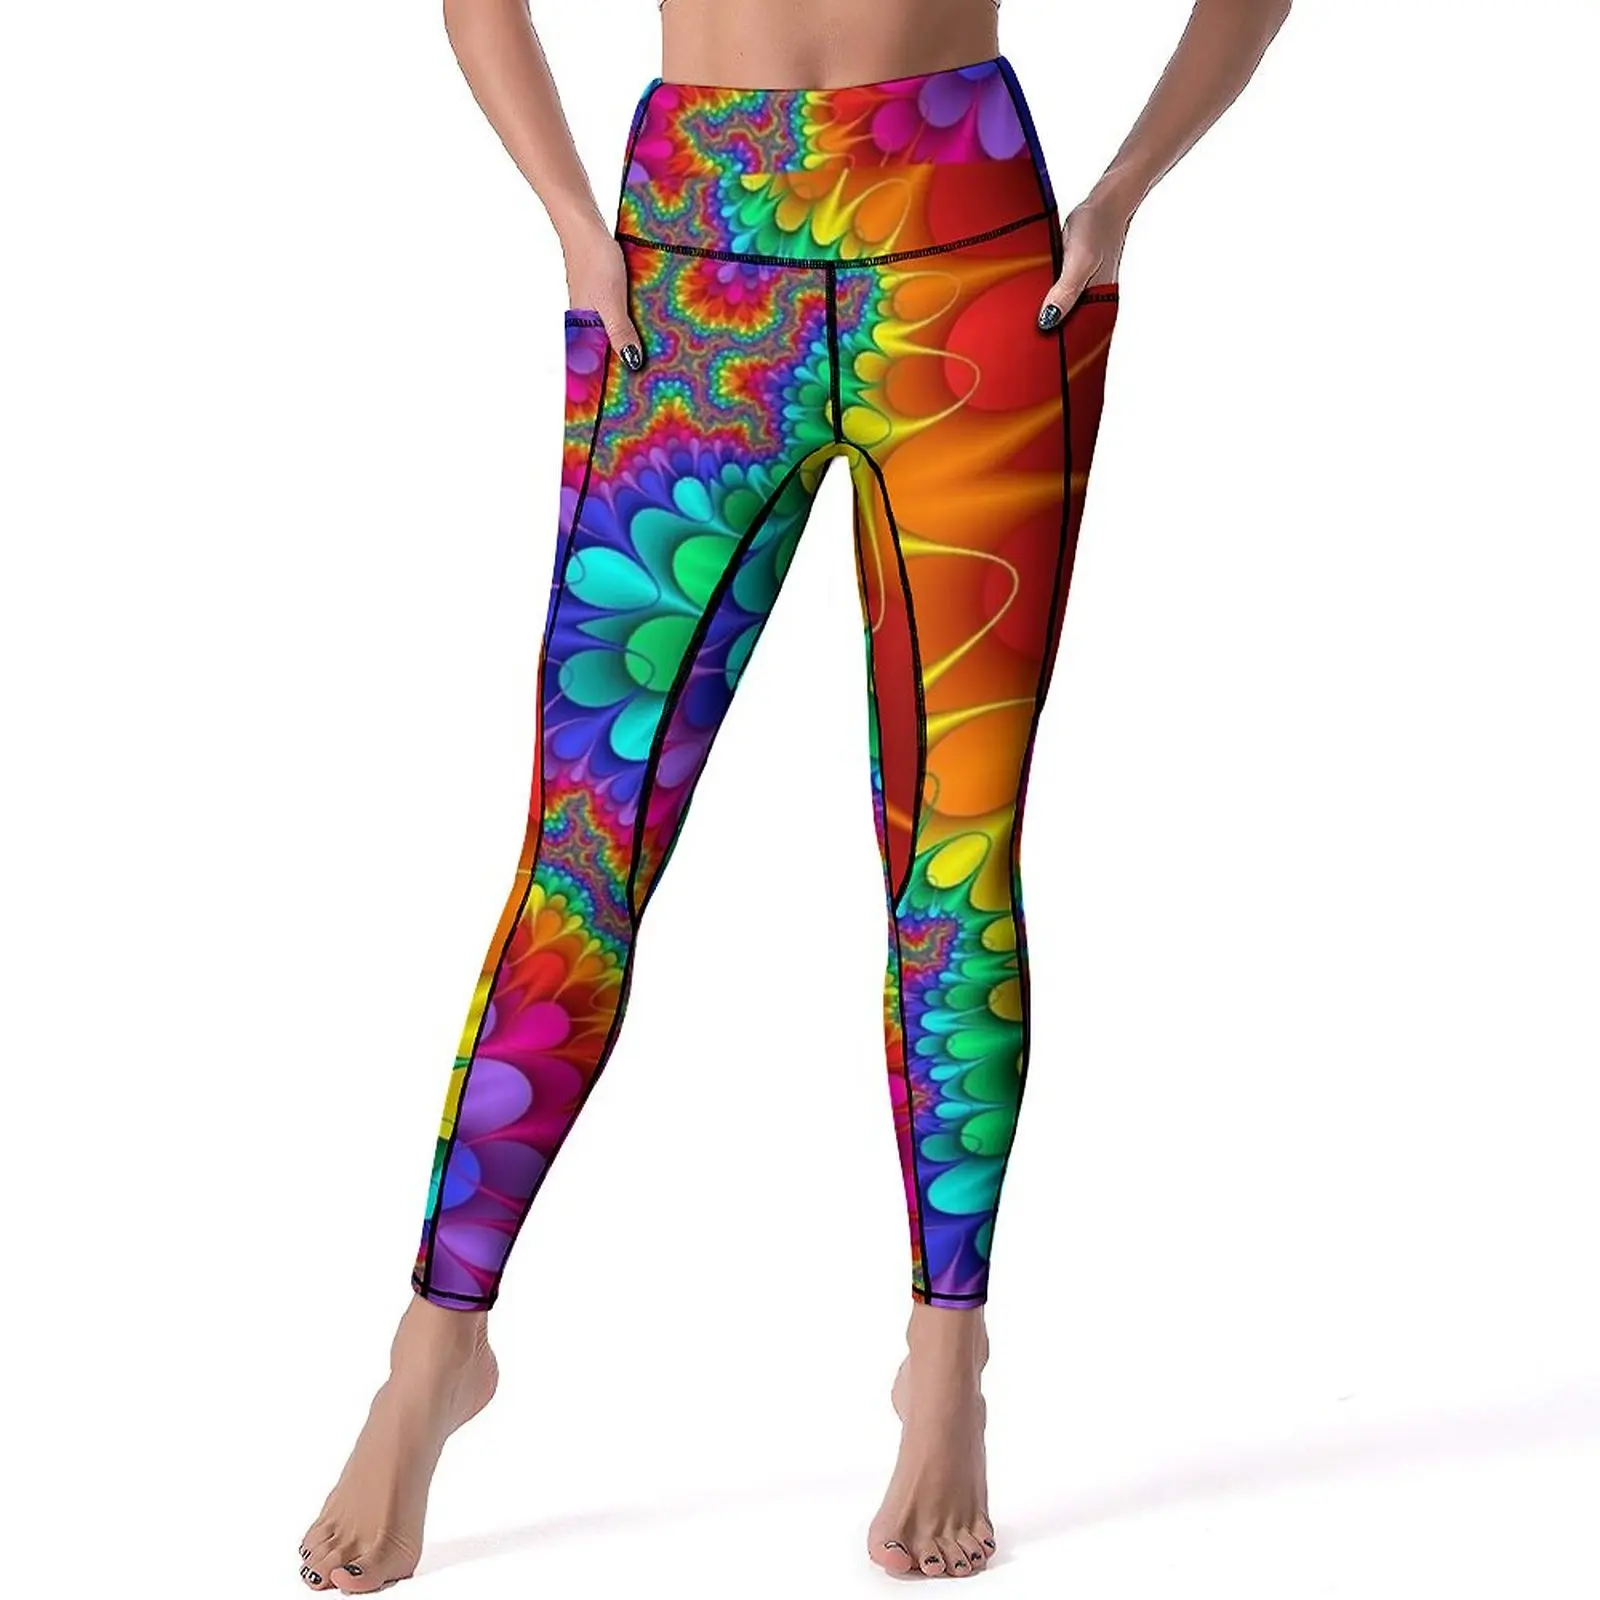 

Rainbow Splash Leggings Sexy Psychedelic Print Fitness Yoga Pants Push Up Stretch Sport Legging Pockets Novelty Design Leggins